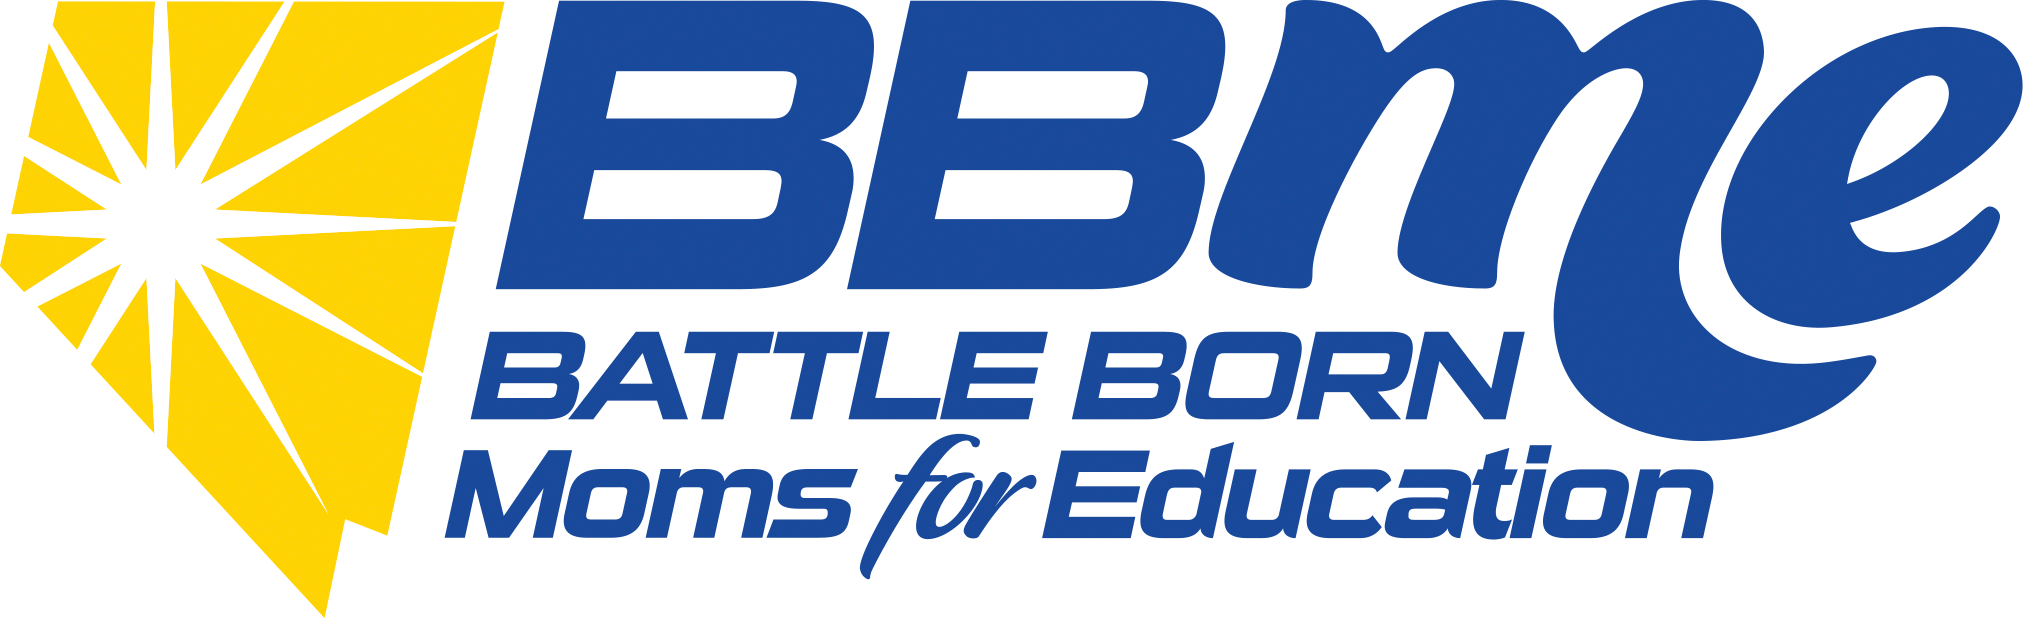 Battle Born ME logo